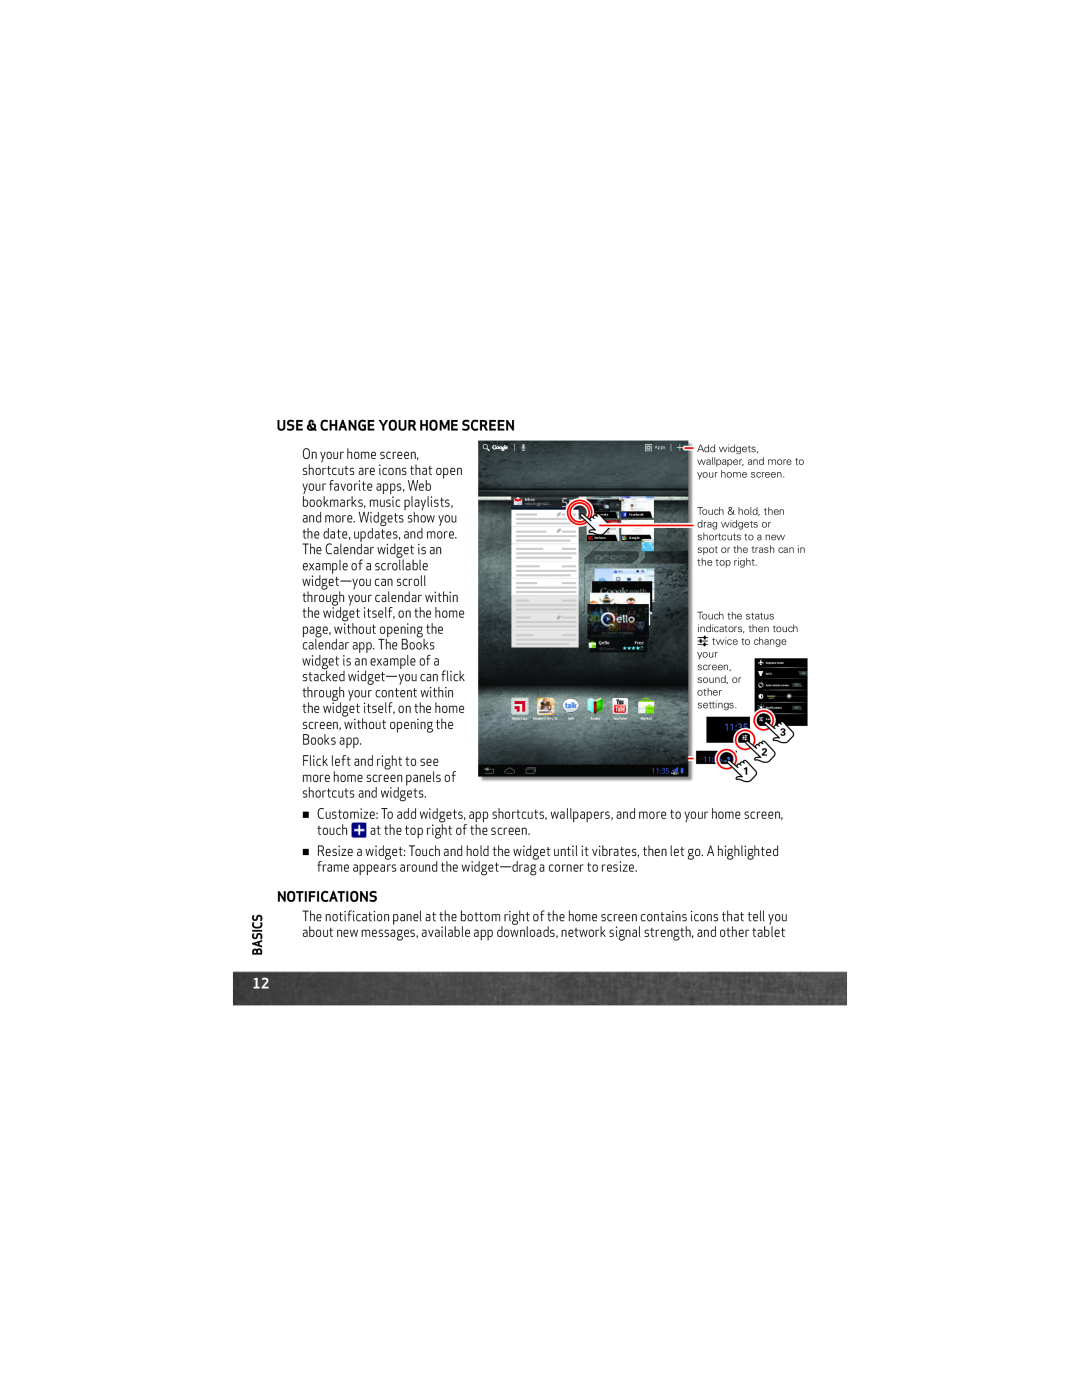 Motorola 8.2 manual Use & Change Your Home Screen, Notifications 